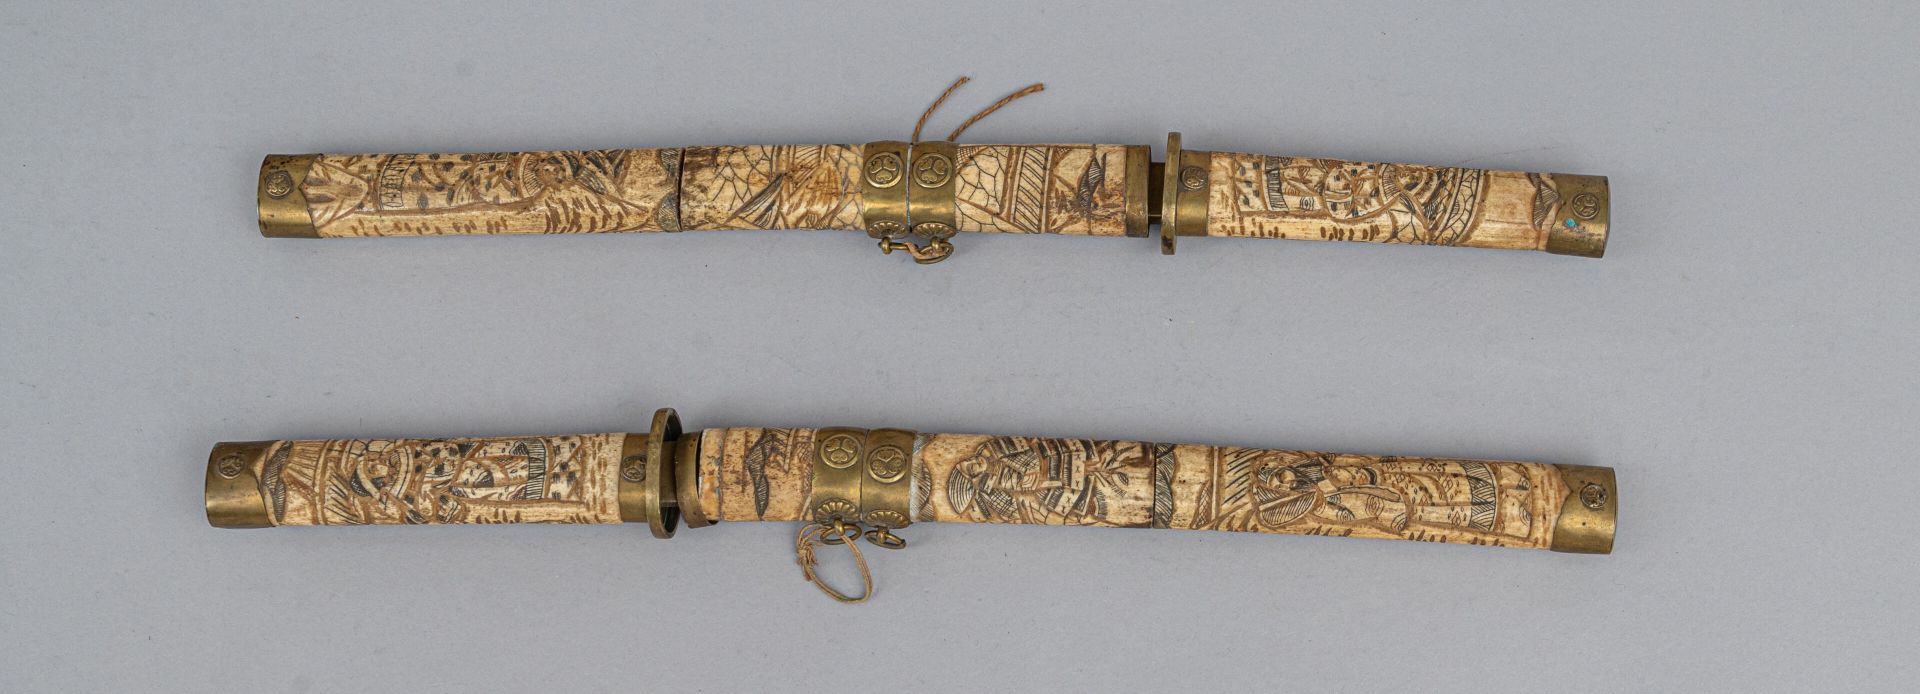 Null 一对和刀，日本，明治时代（1868-1912 年）
它们的骨座上刻有人物装饰，渊镜和其他铜合金装饰物上装饰有纹章（mon），刀刃部分氧化。
长 47 &hellip;